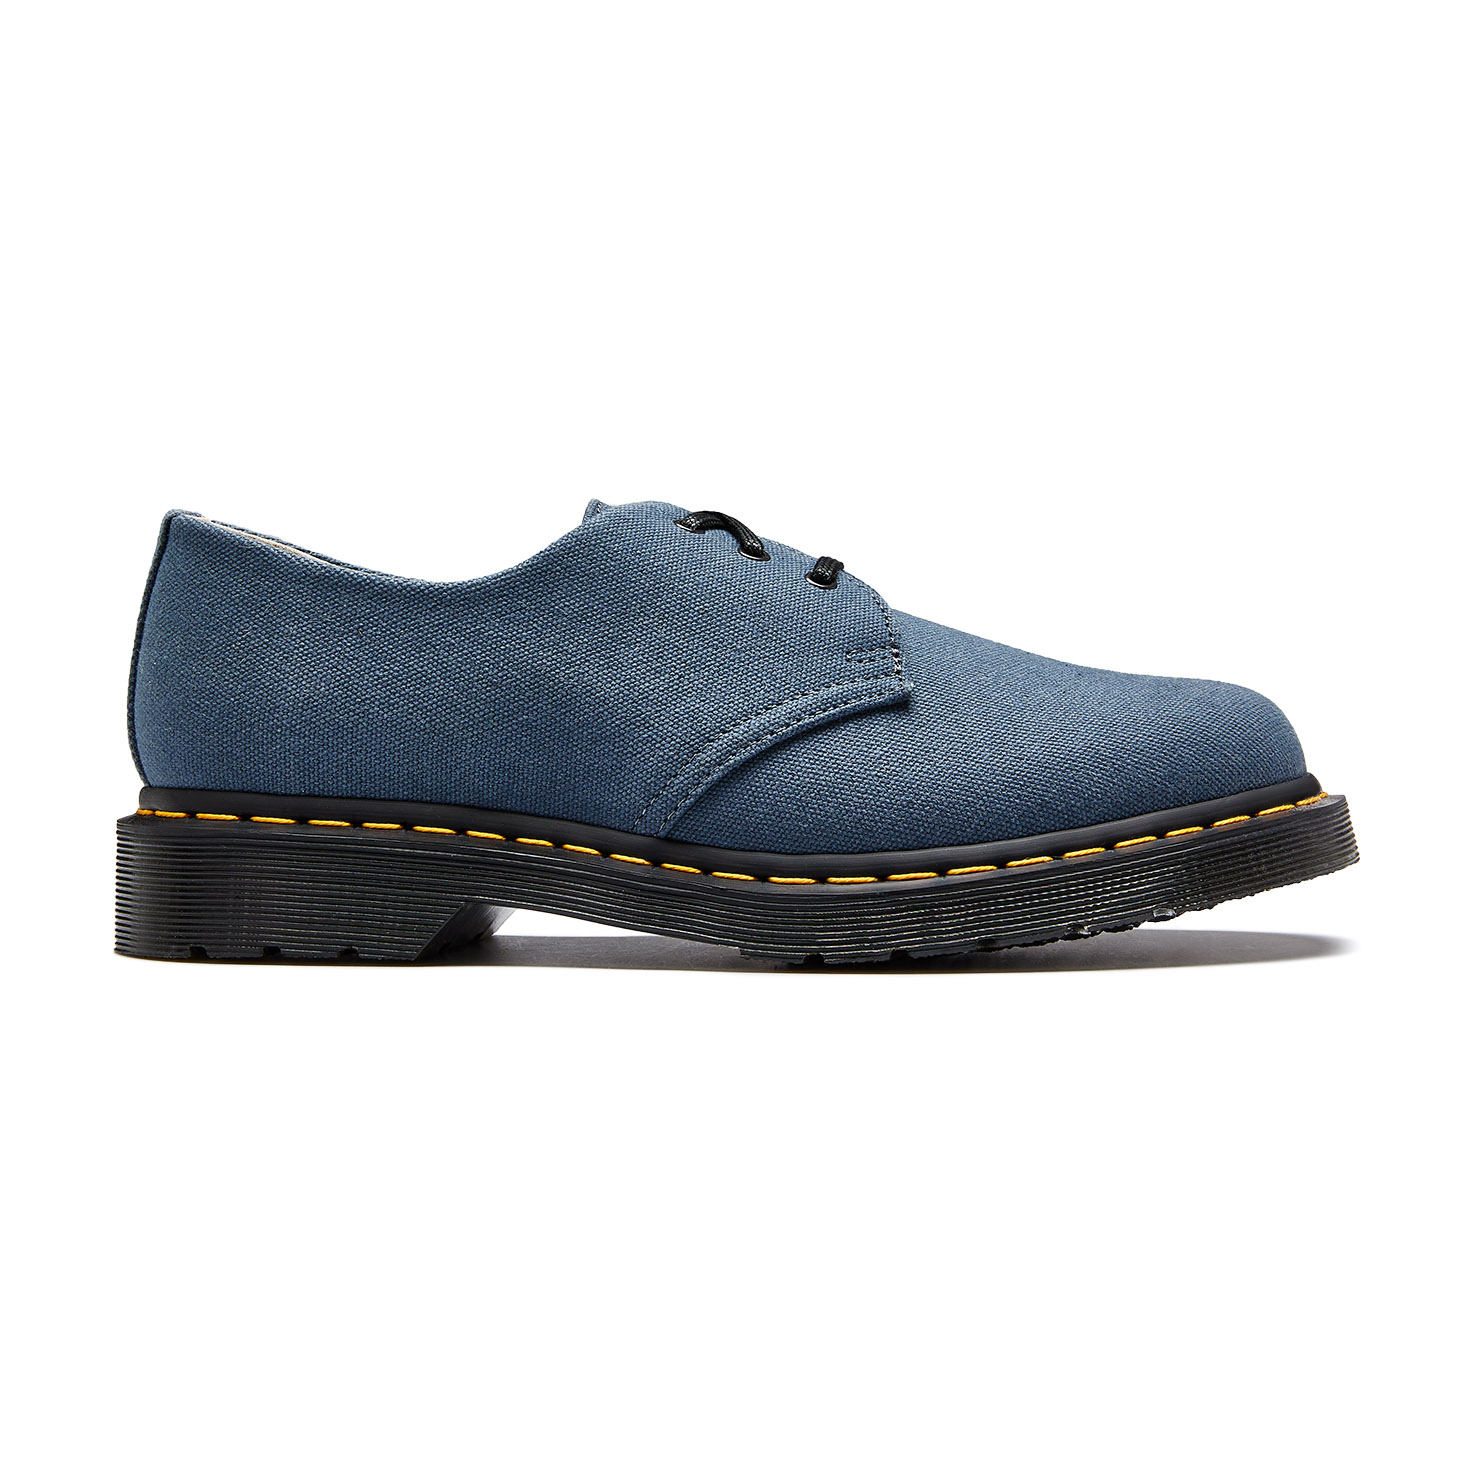 1461 Canvas Oxford Shoes DR.MARTENS, размер 40, цвет синий DM27211 - фото 1